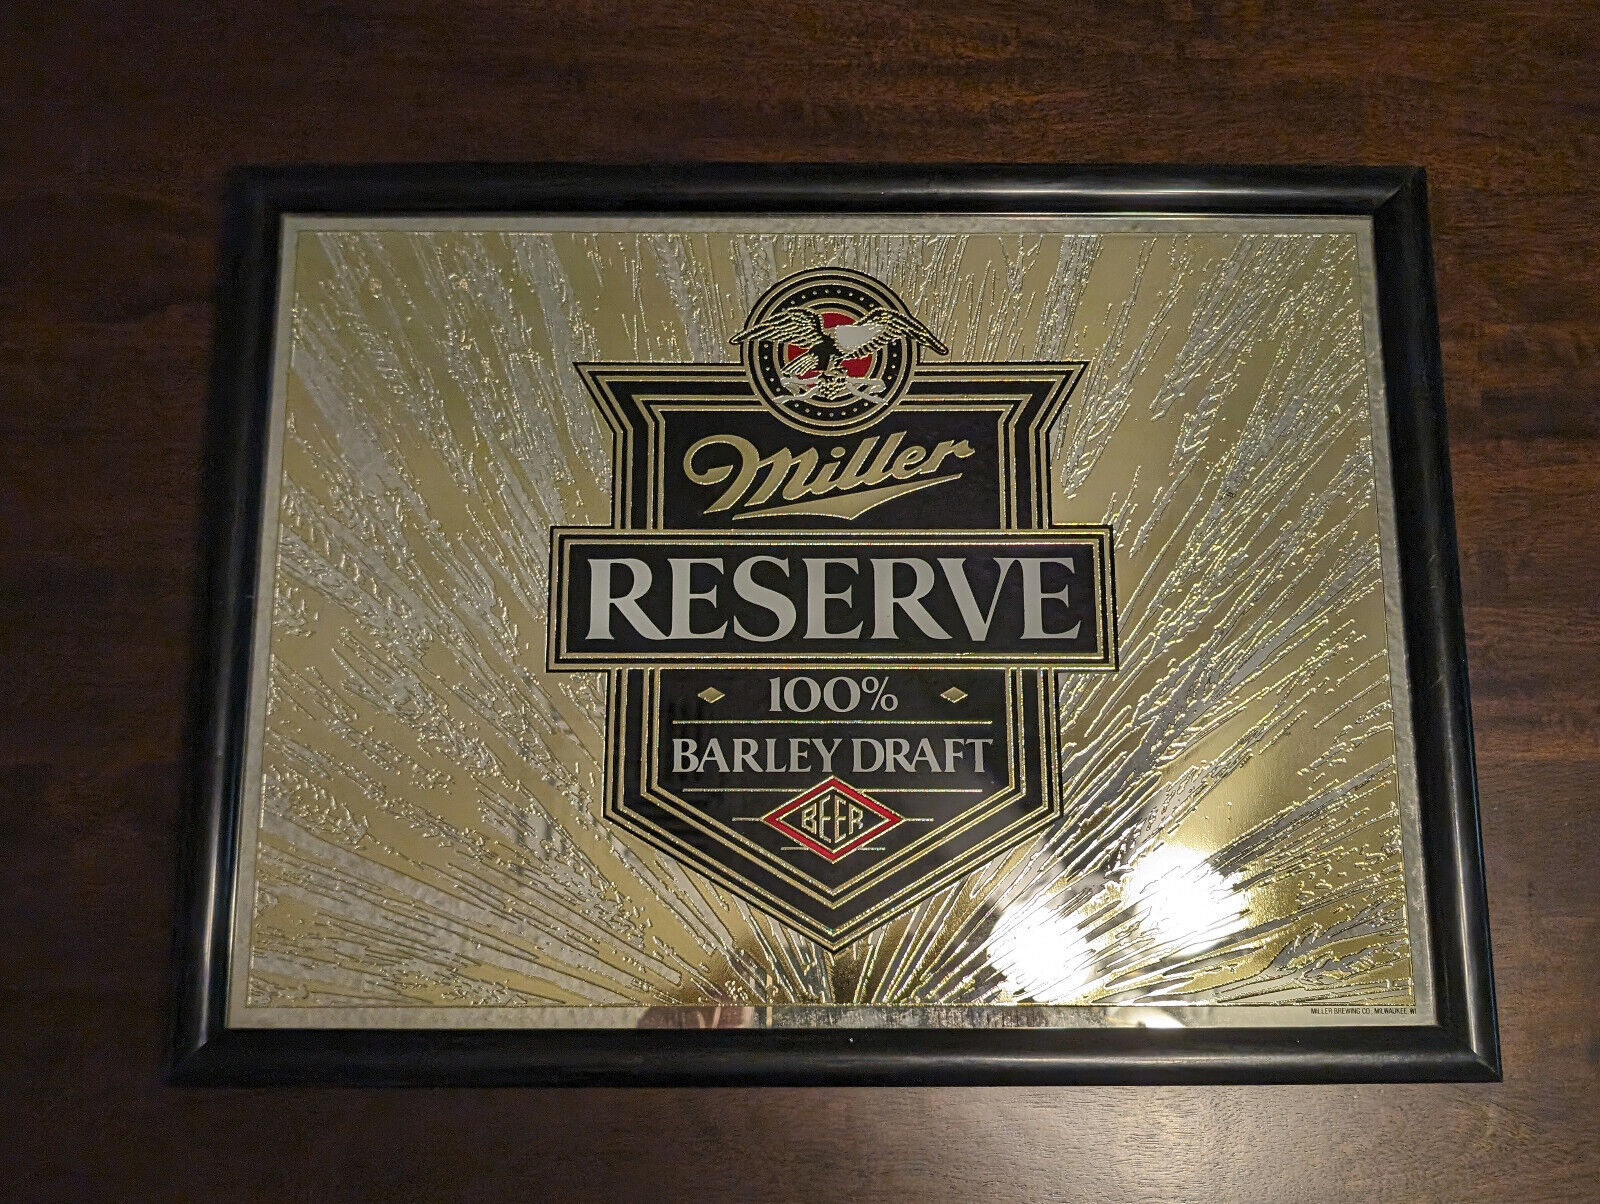 Miller Reserve 100% Barley Draft Beer Mirrored Bar Sign